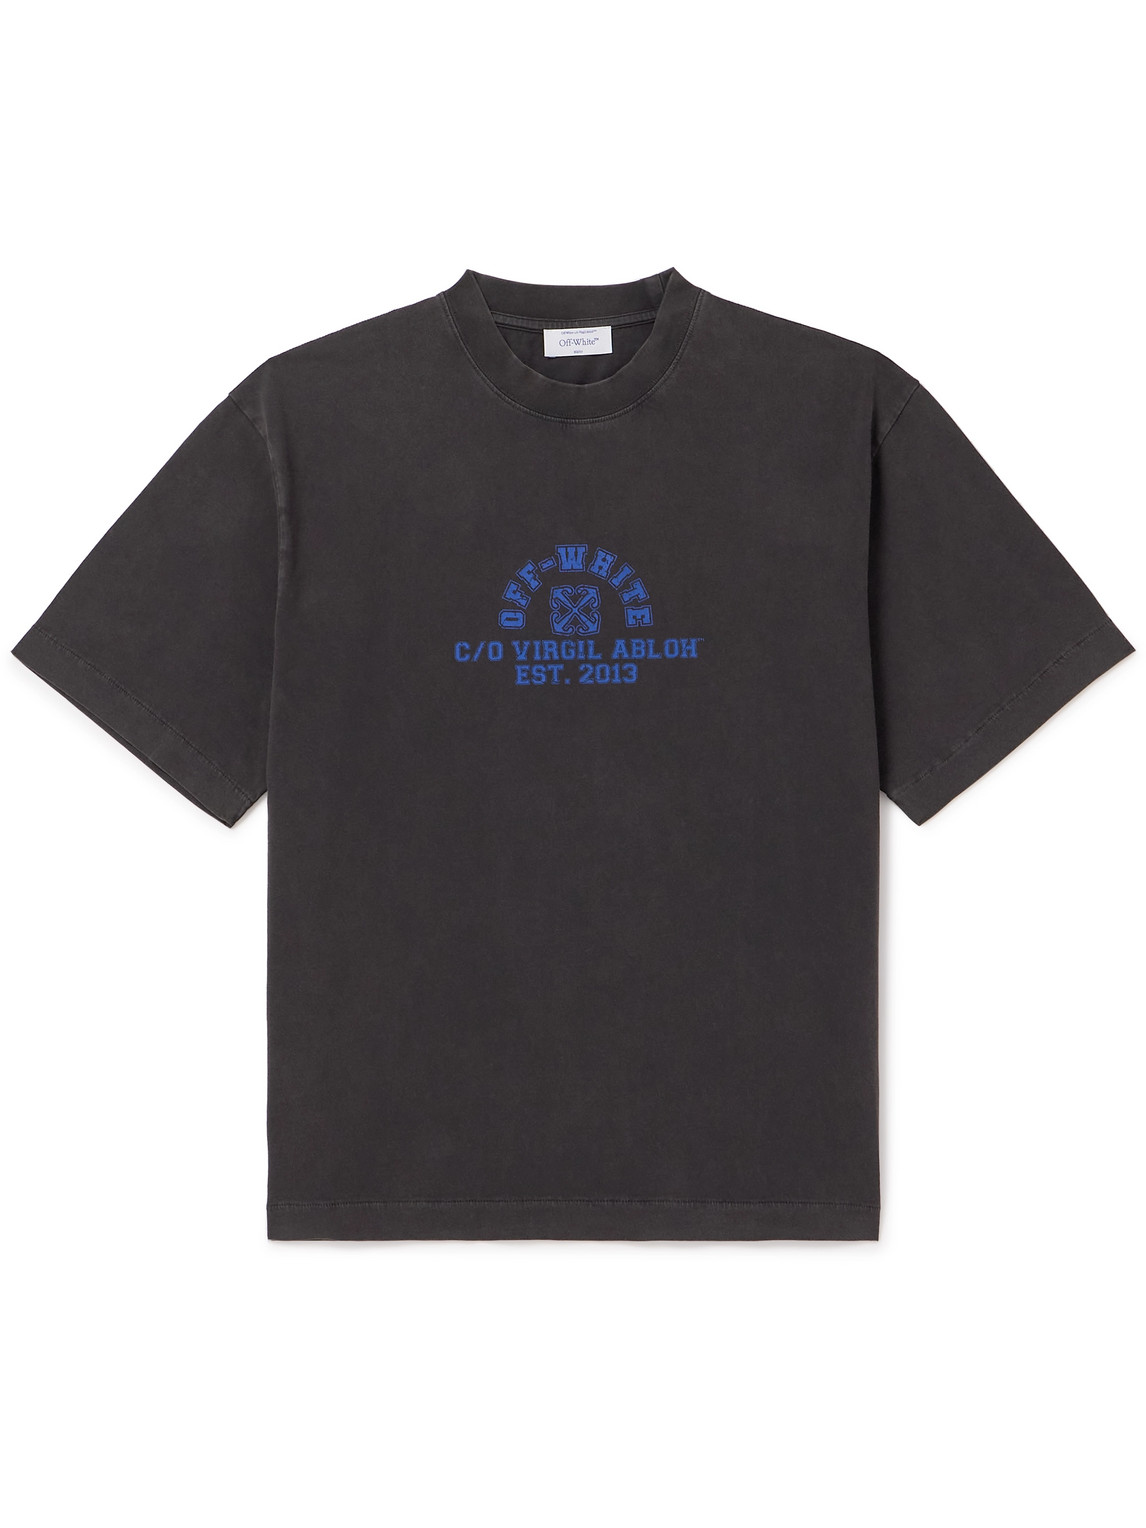 Off-White - Logo-Print Cotton-Jersey T-Shirt - Men - Black - L von Off-White